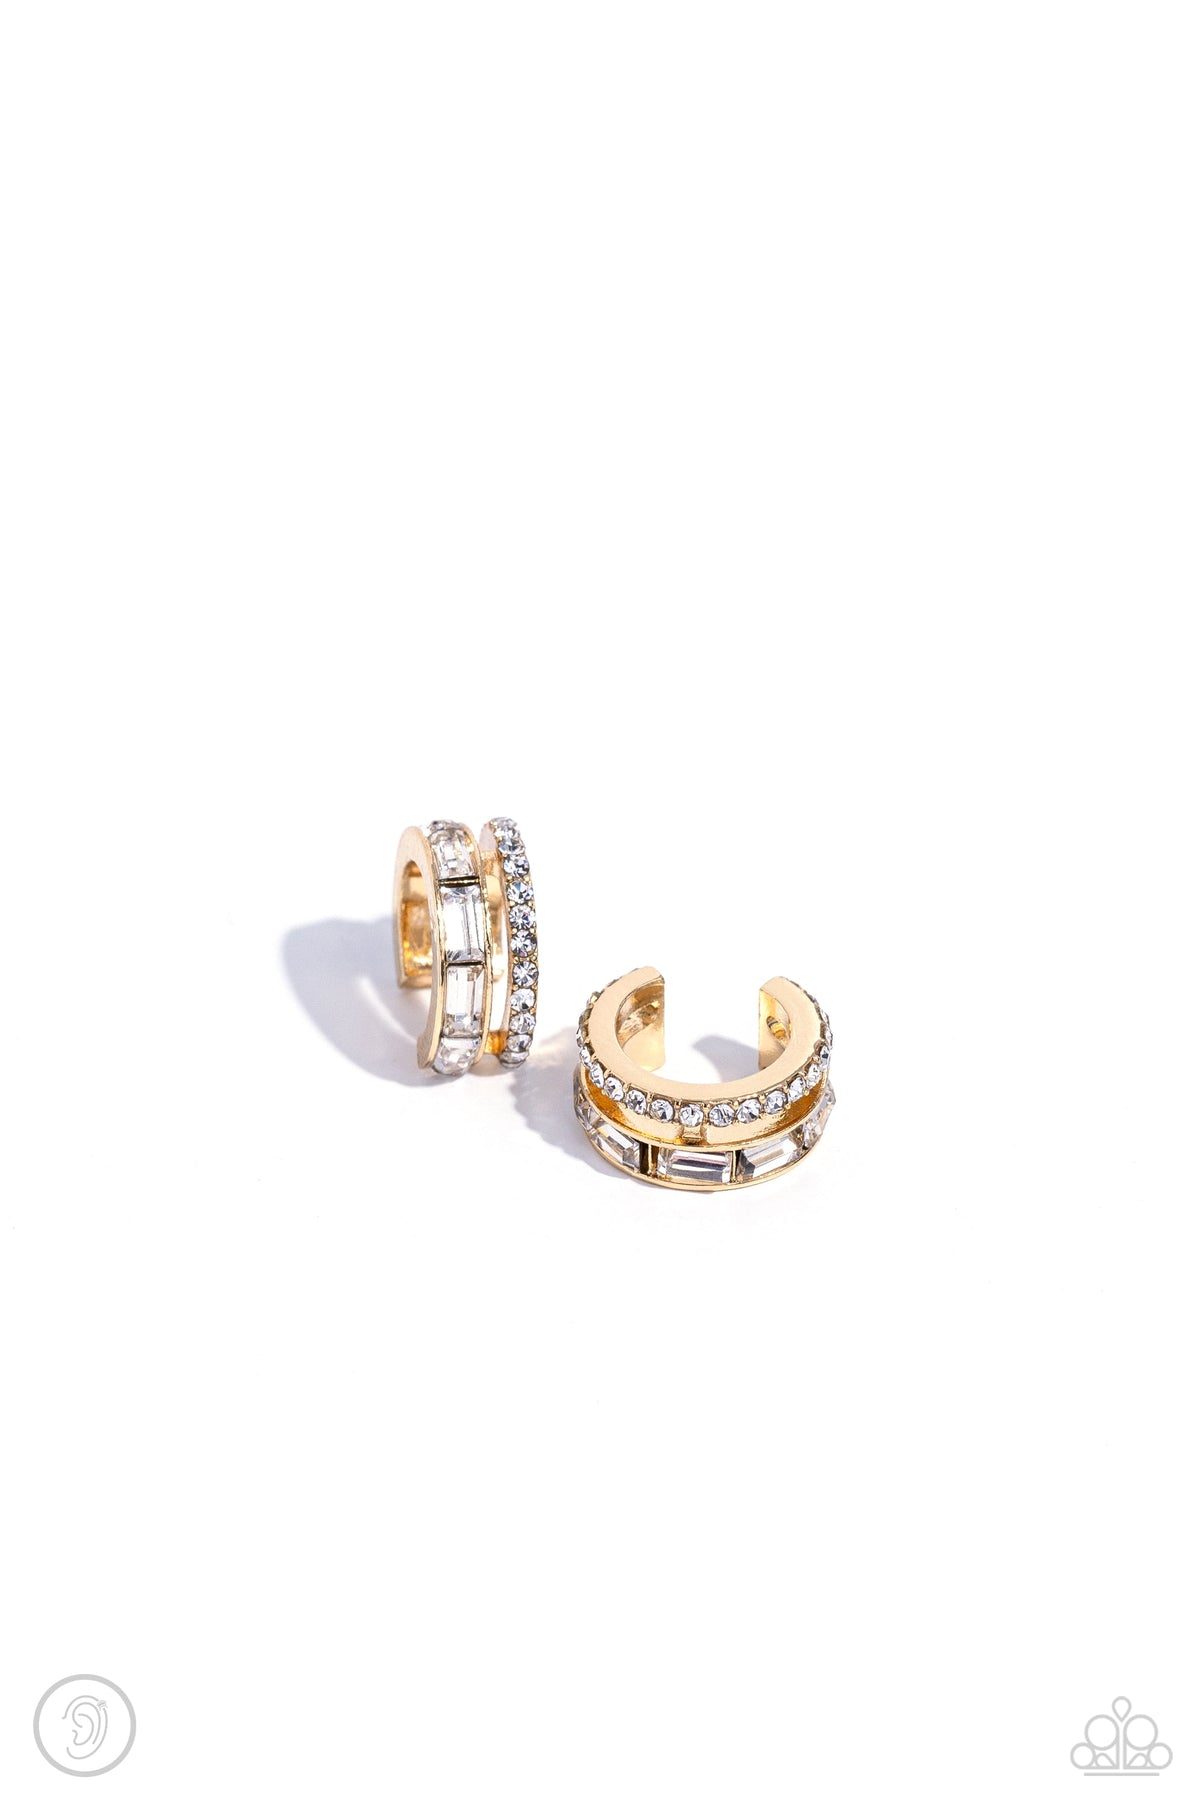 Dont Sweat The Small CUFF Gold &amp; White Rhinestone Cuff Earrings - Paparazzi Accessories- lightbox - CarasShop.com - $5 Jewelry by Cara Jewels